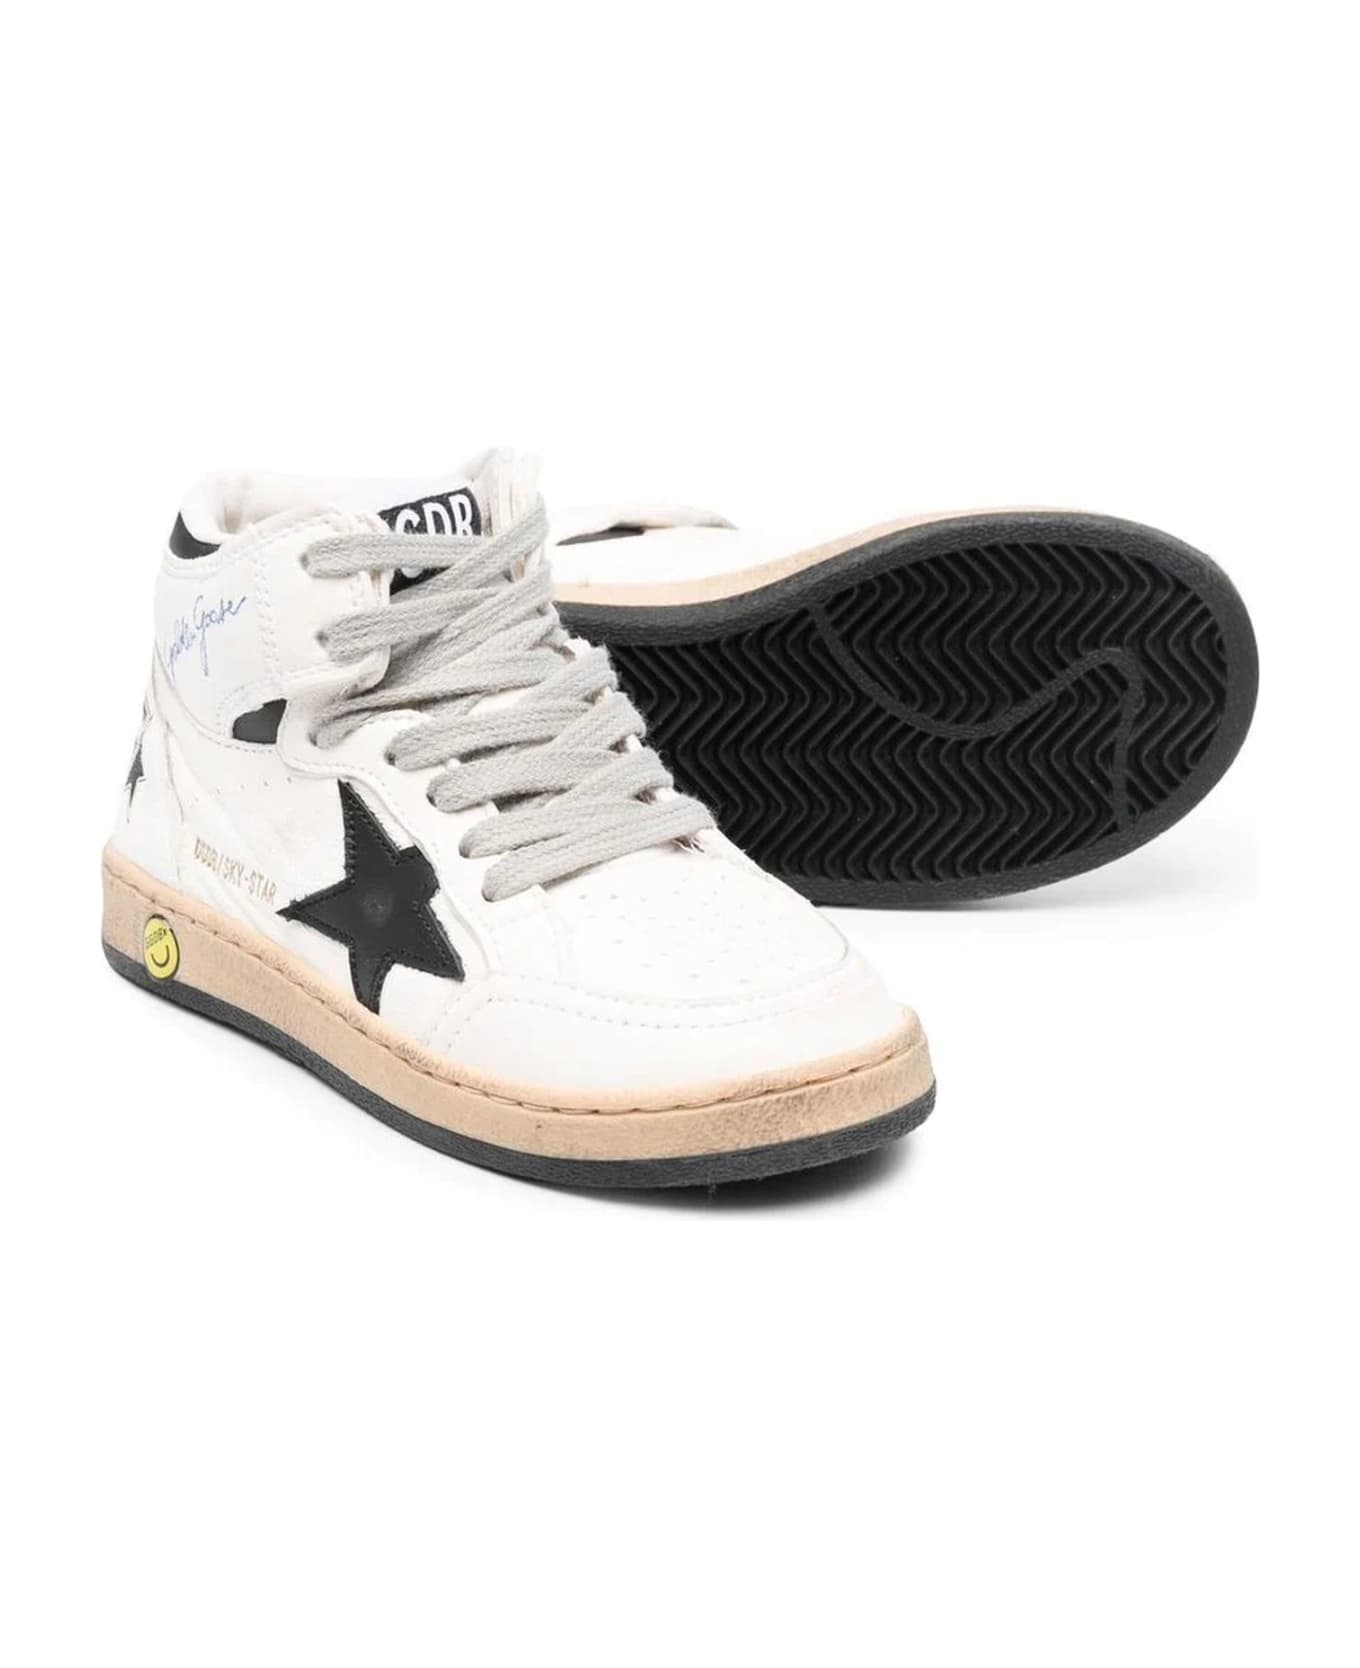 Golden Goose White Calf Leather Sneakers - White/black